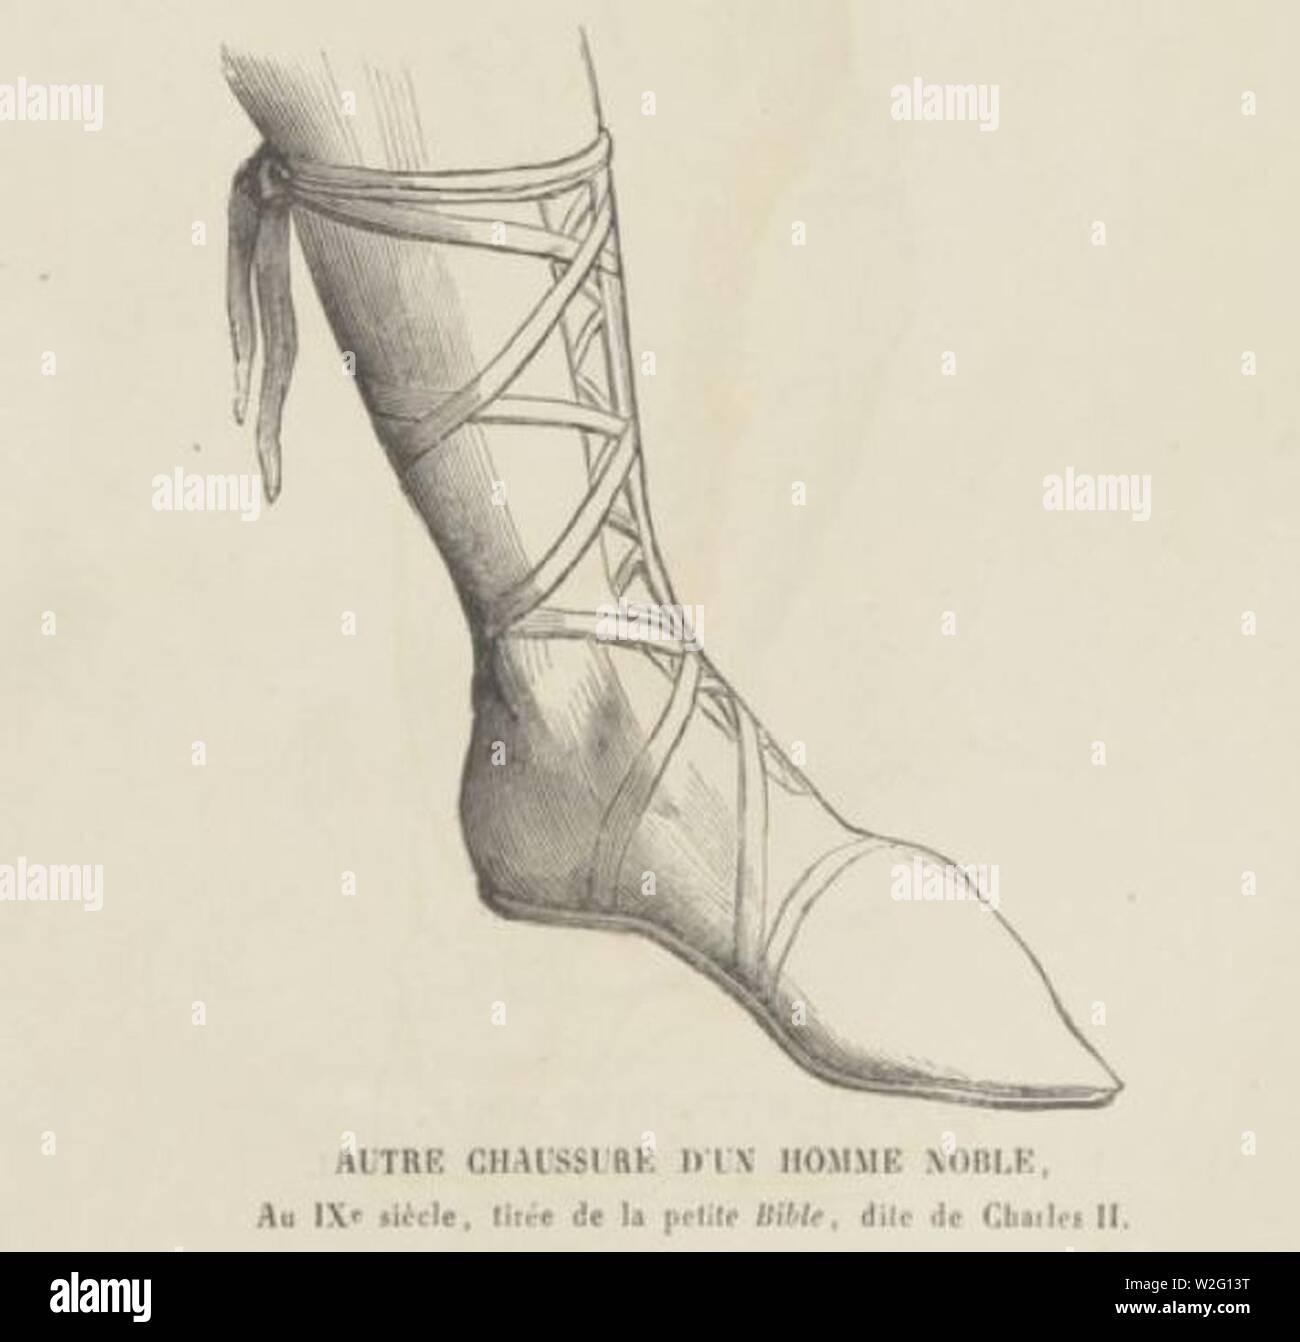 Chaussure d'un noble ixe siècke. Stock Photo